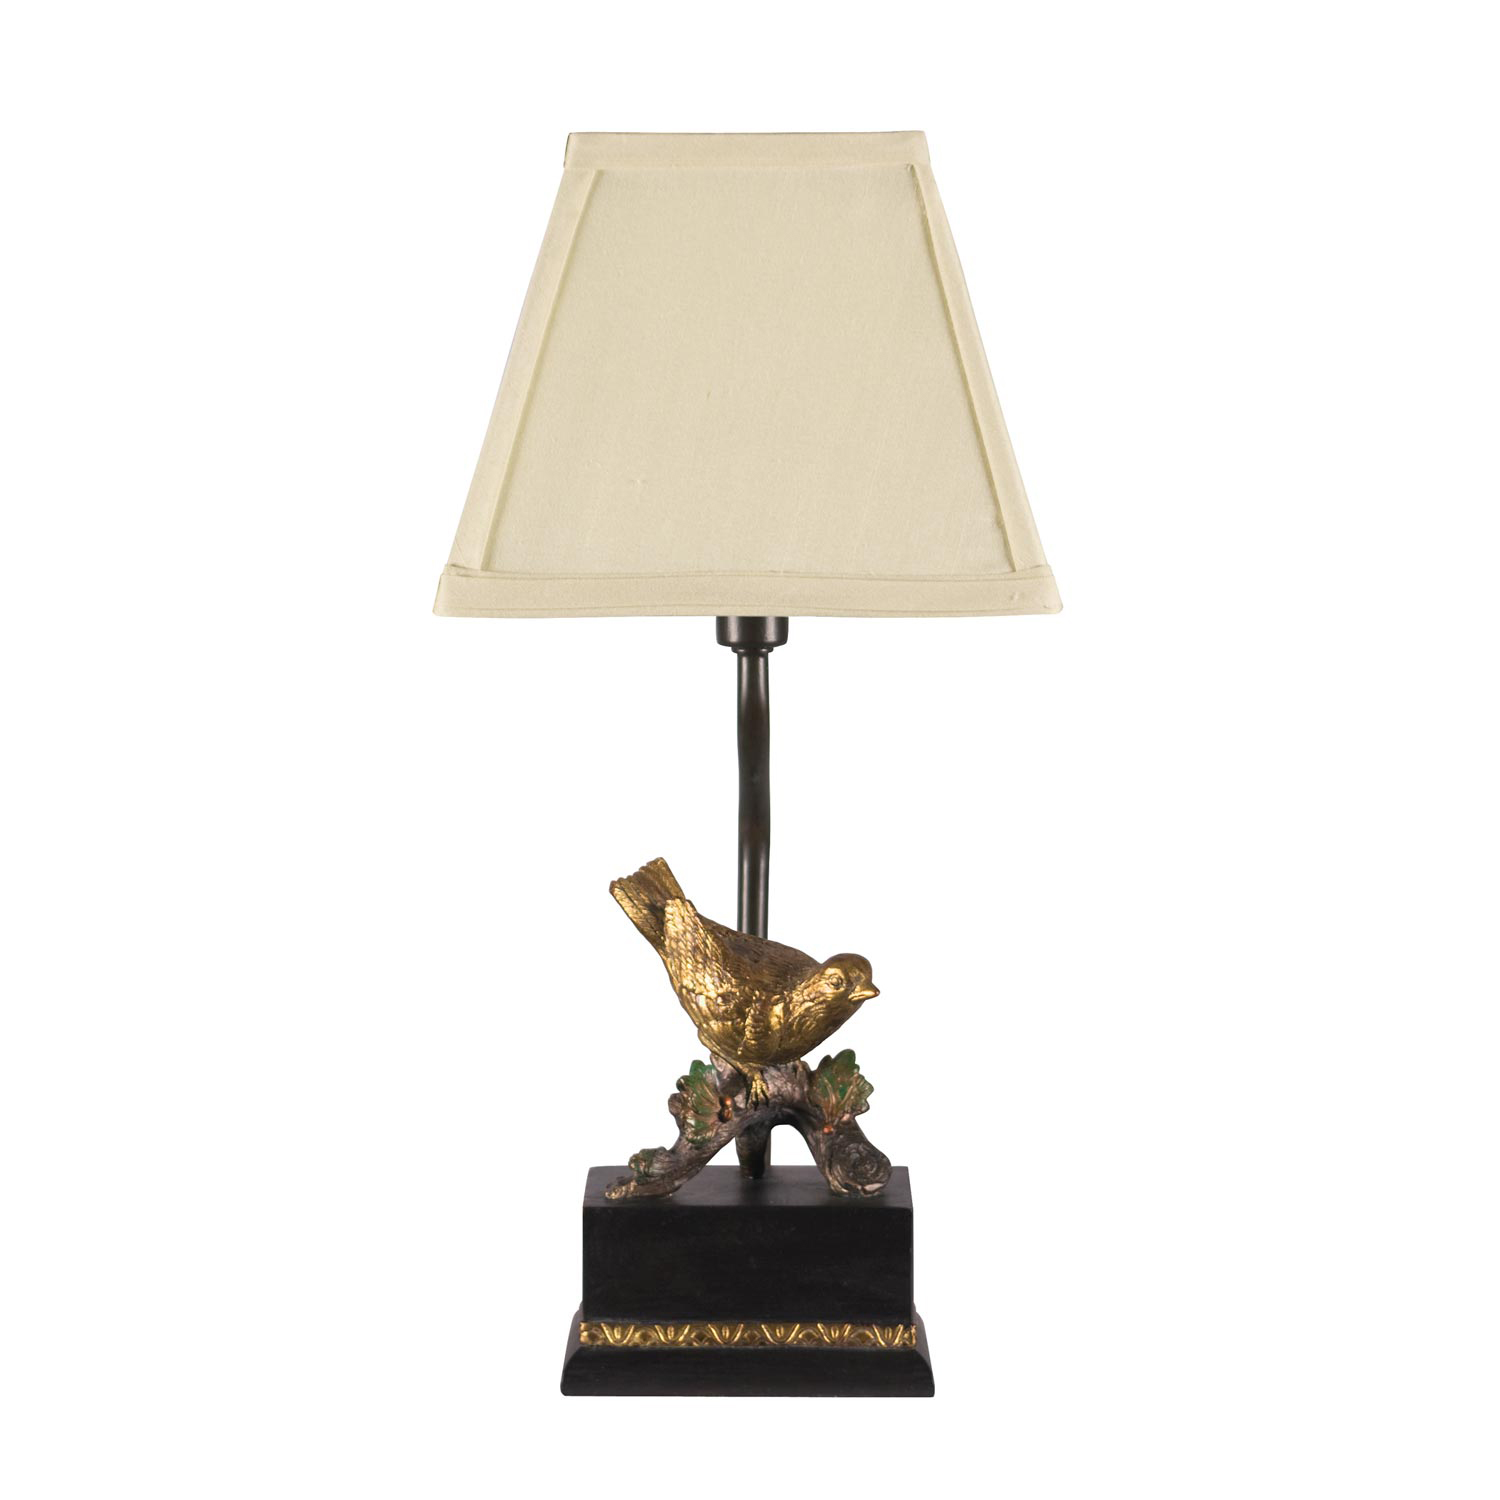 Elk Lighting 93-938 Perching Robin Table Lamp